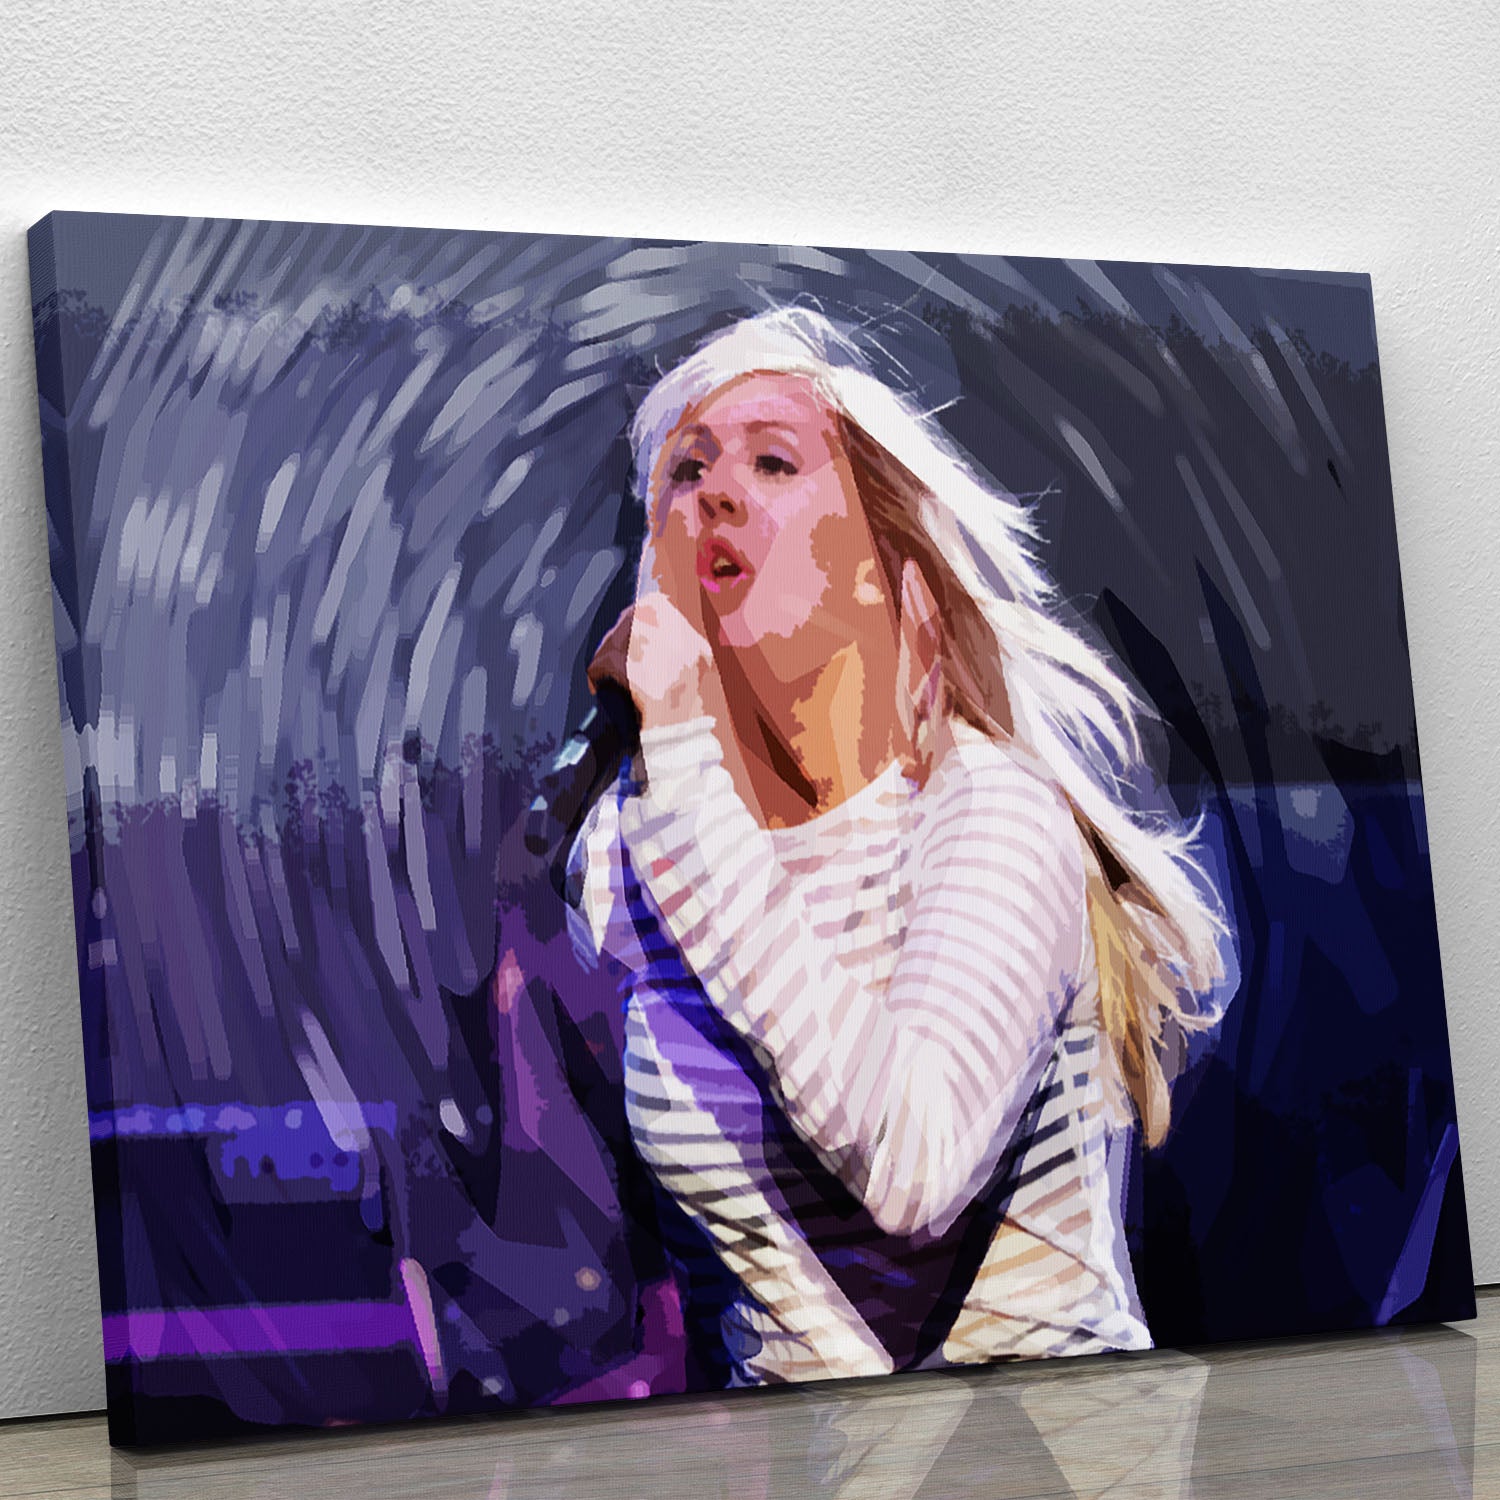 Ellie Goulding on stage Pop Art Canvas Print or Poster - Canvas Art Rocks - 1